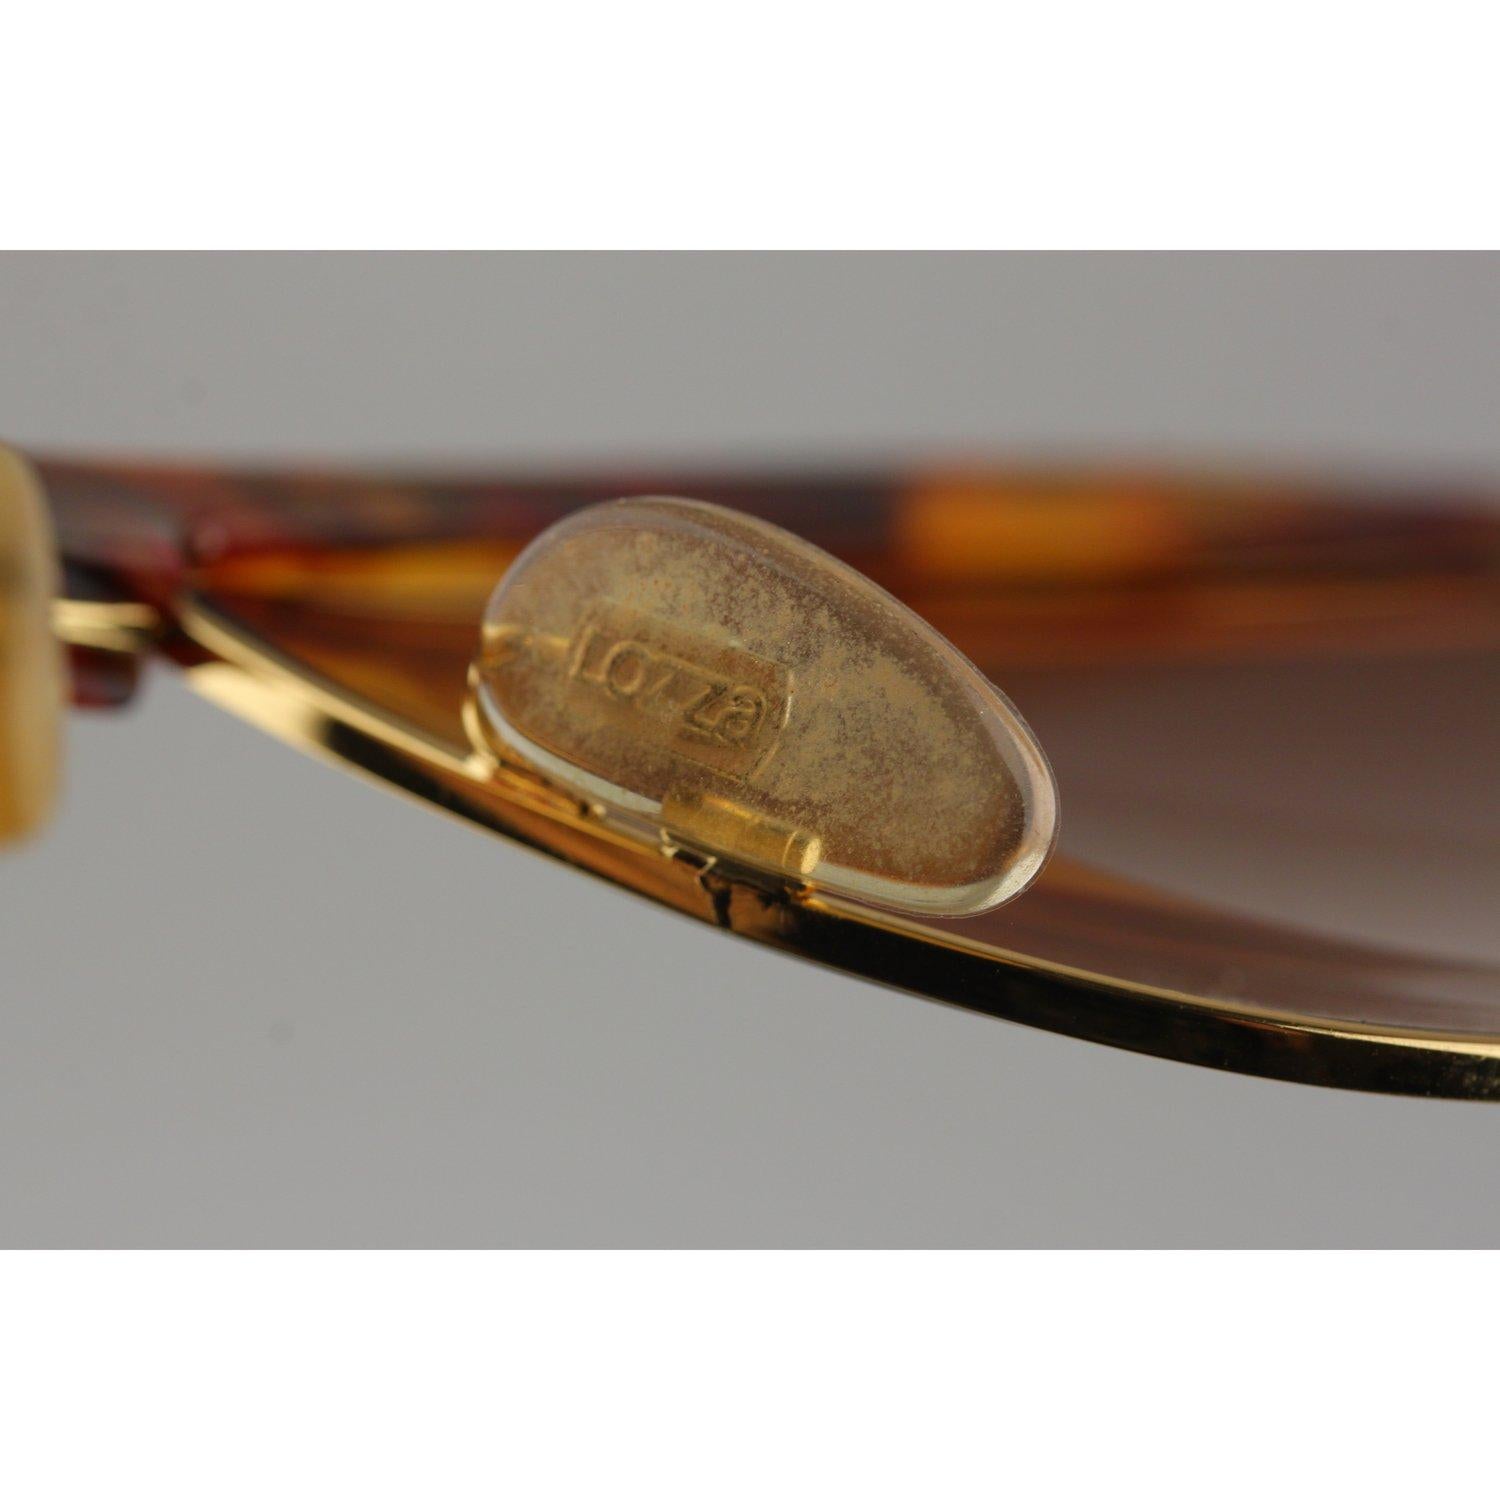 Lozza VIntage Unisex Brown and Gold Sunglasses Mod. Letizia 135mm Wide 3